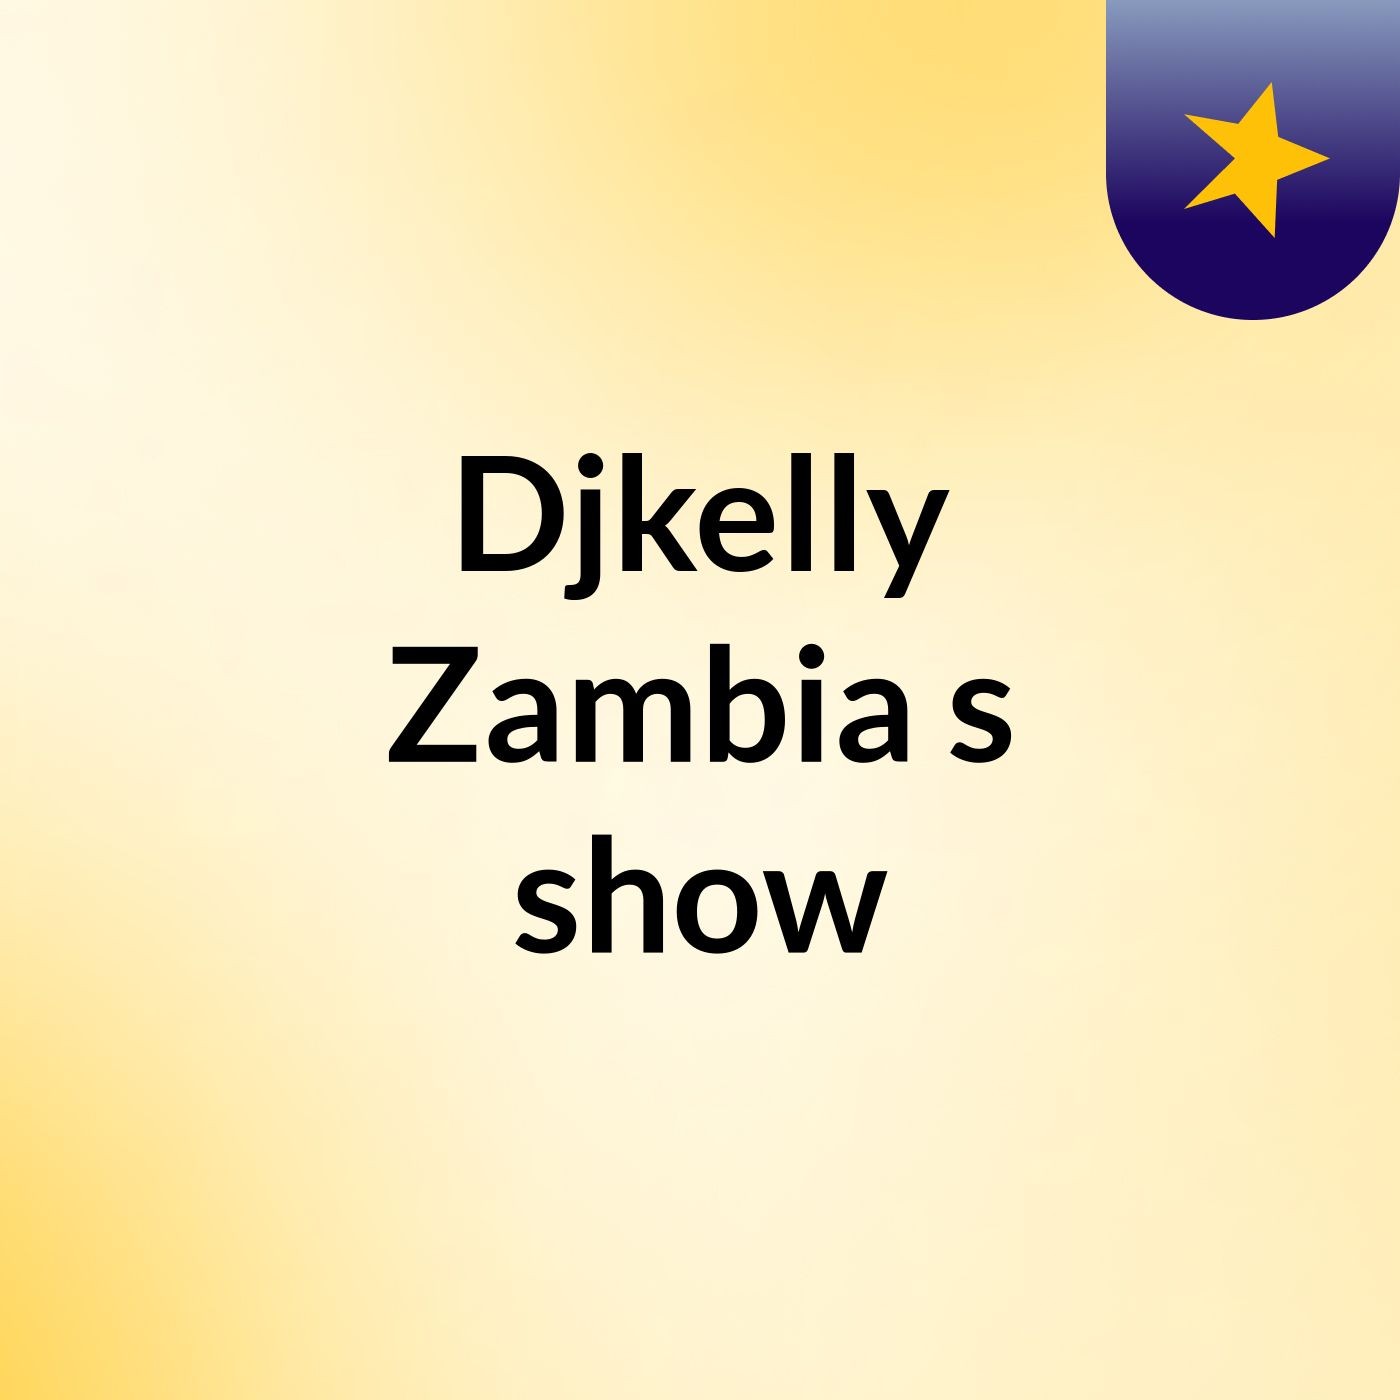 Episode 4 - Djkelly Zambia's show